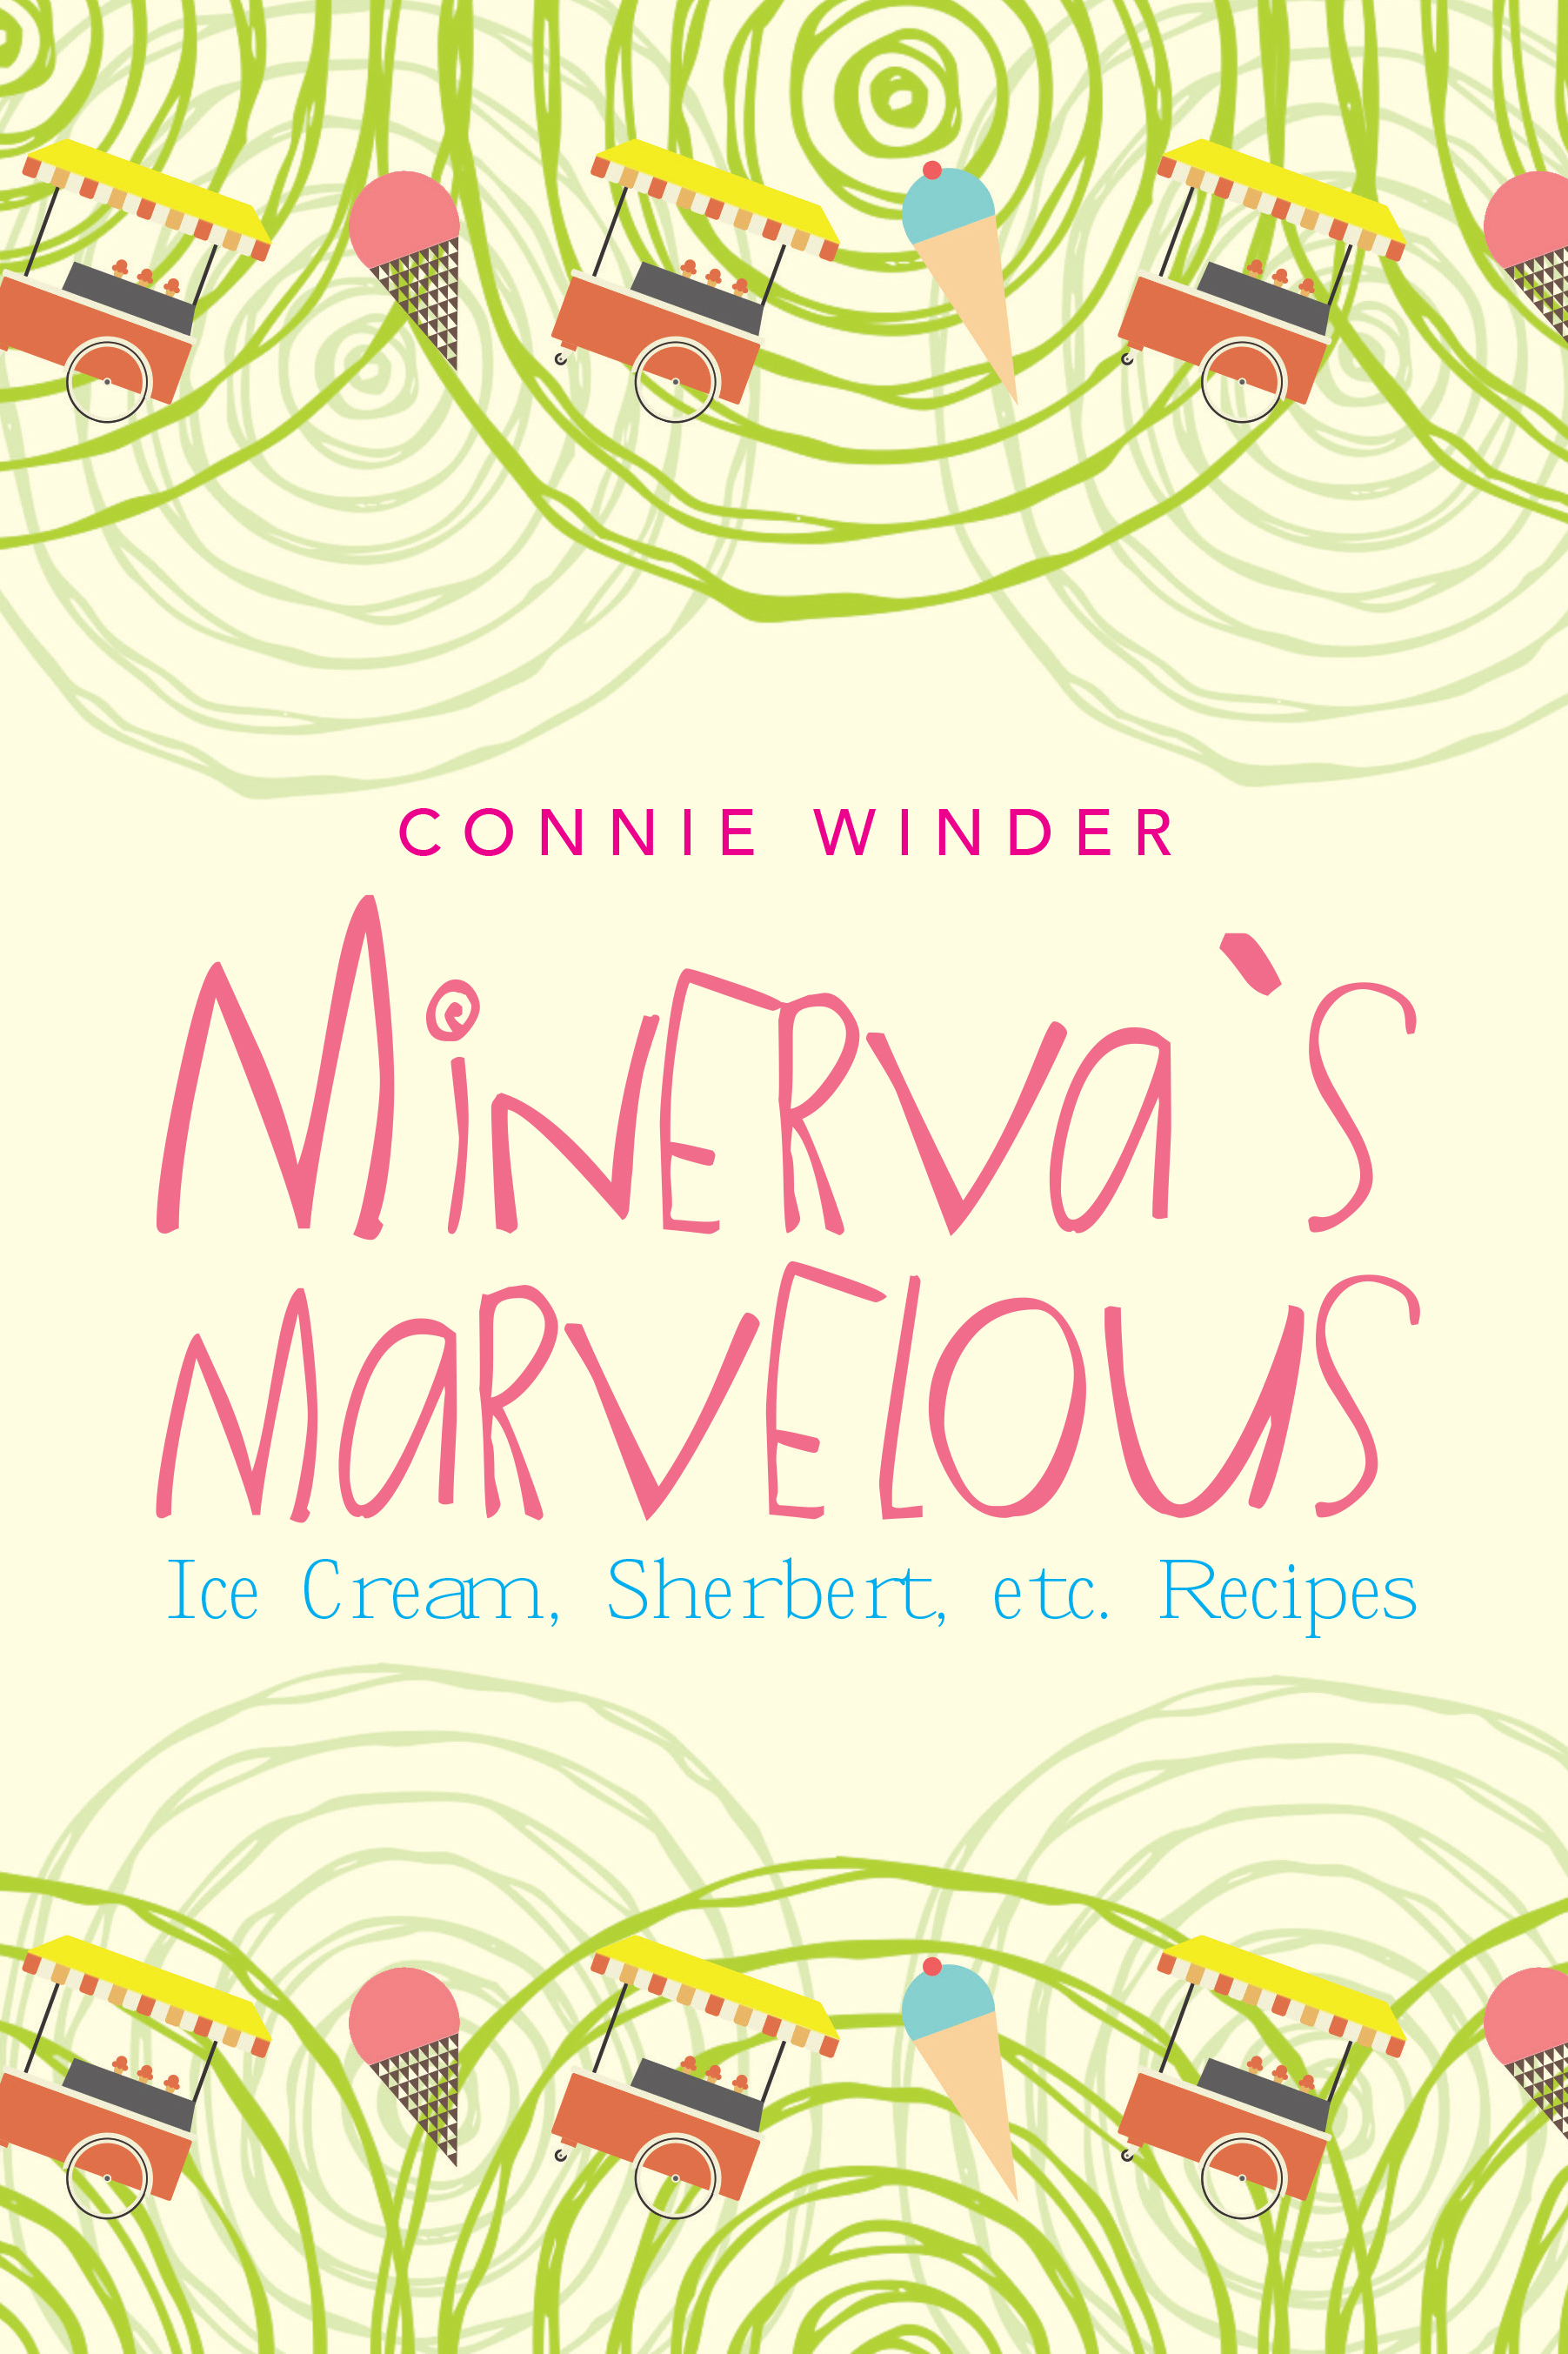 Minerva's Marvelous Ice Cream, Sherbet, etc. Recipes Cover Image